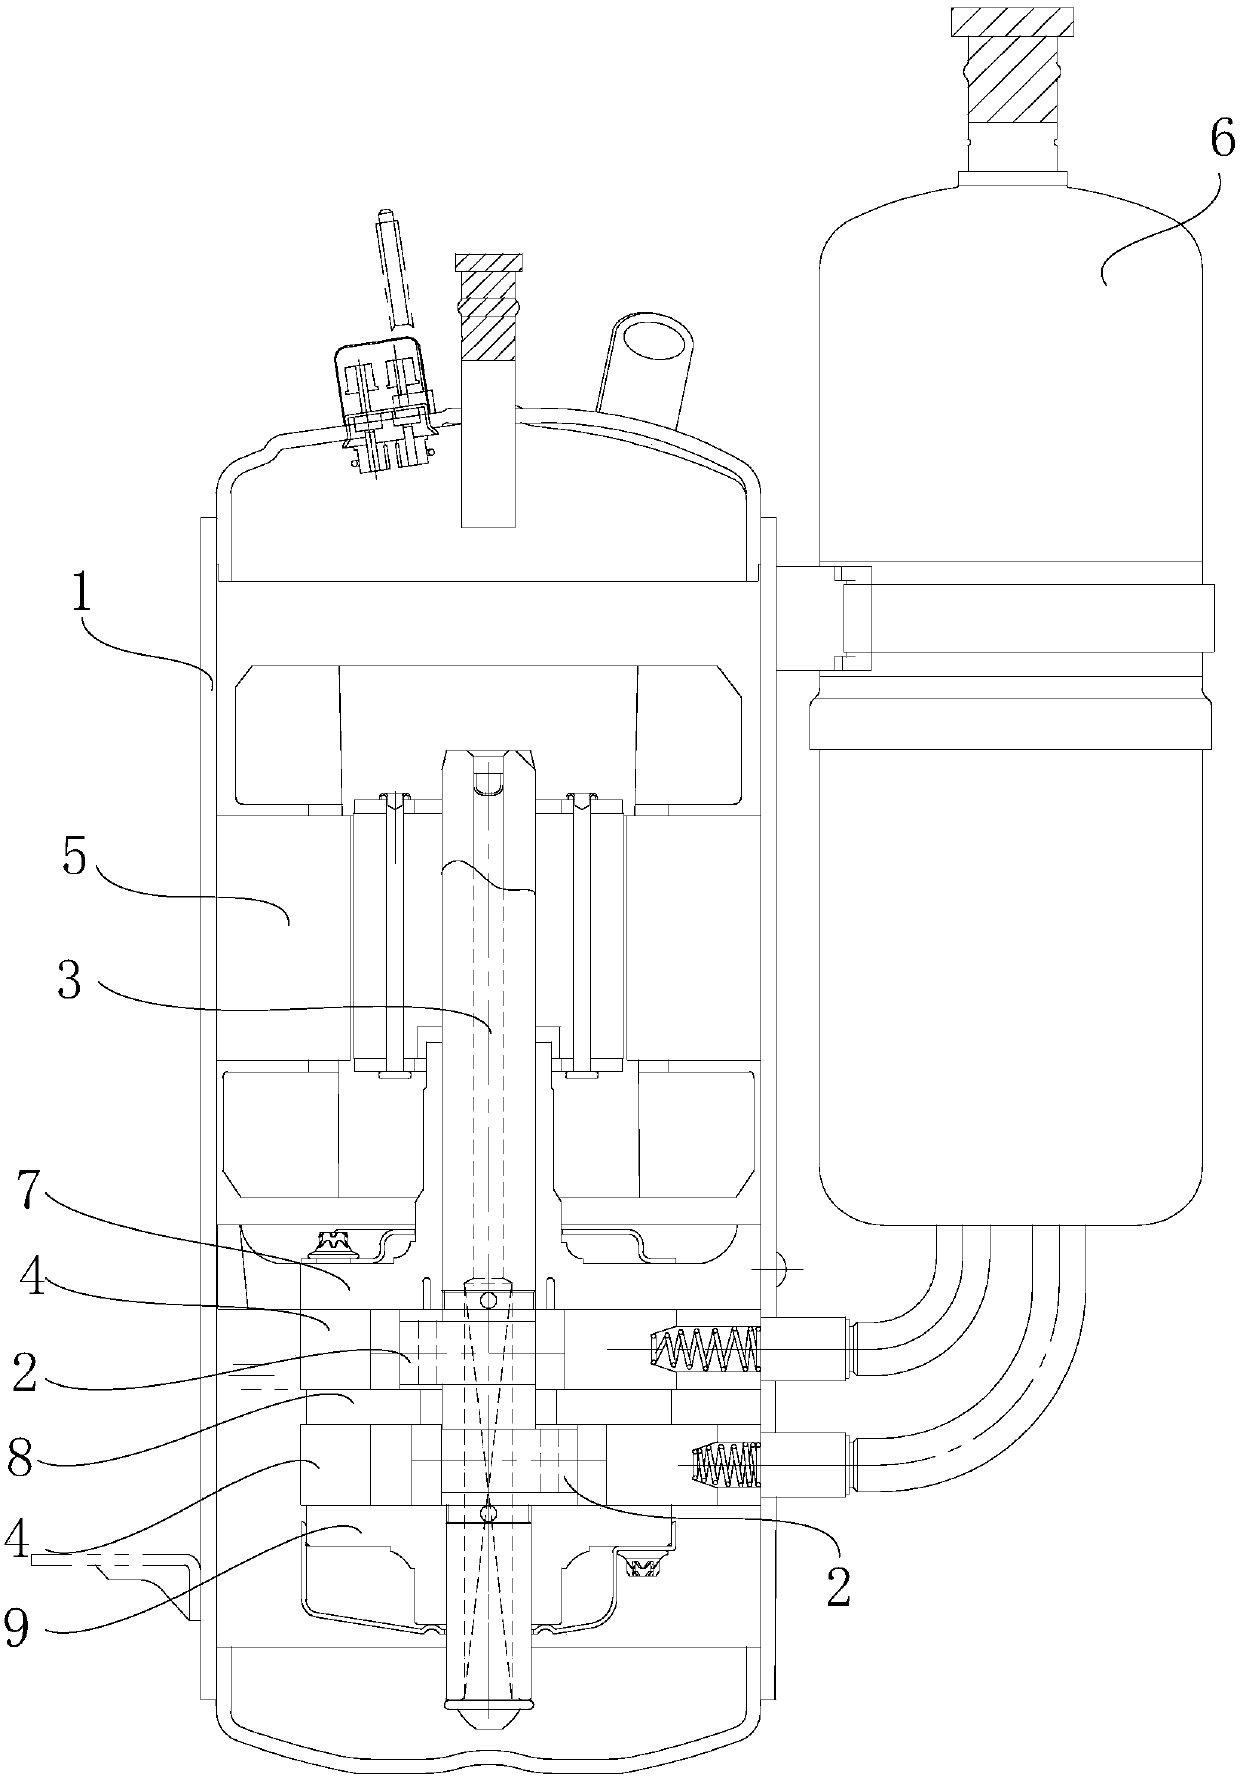 Double-cylinder compressor